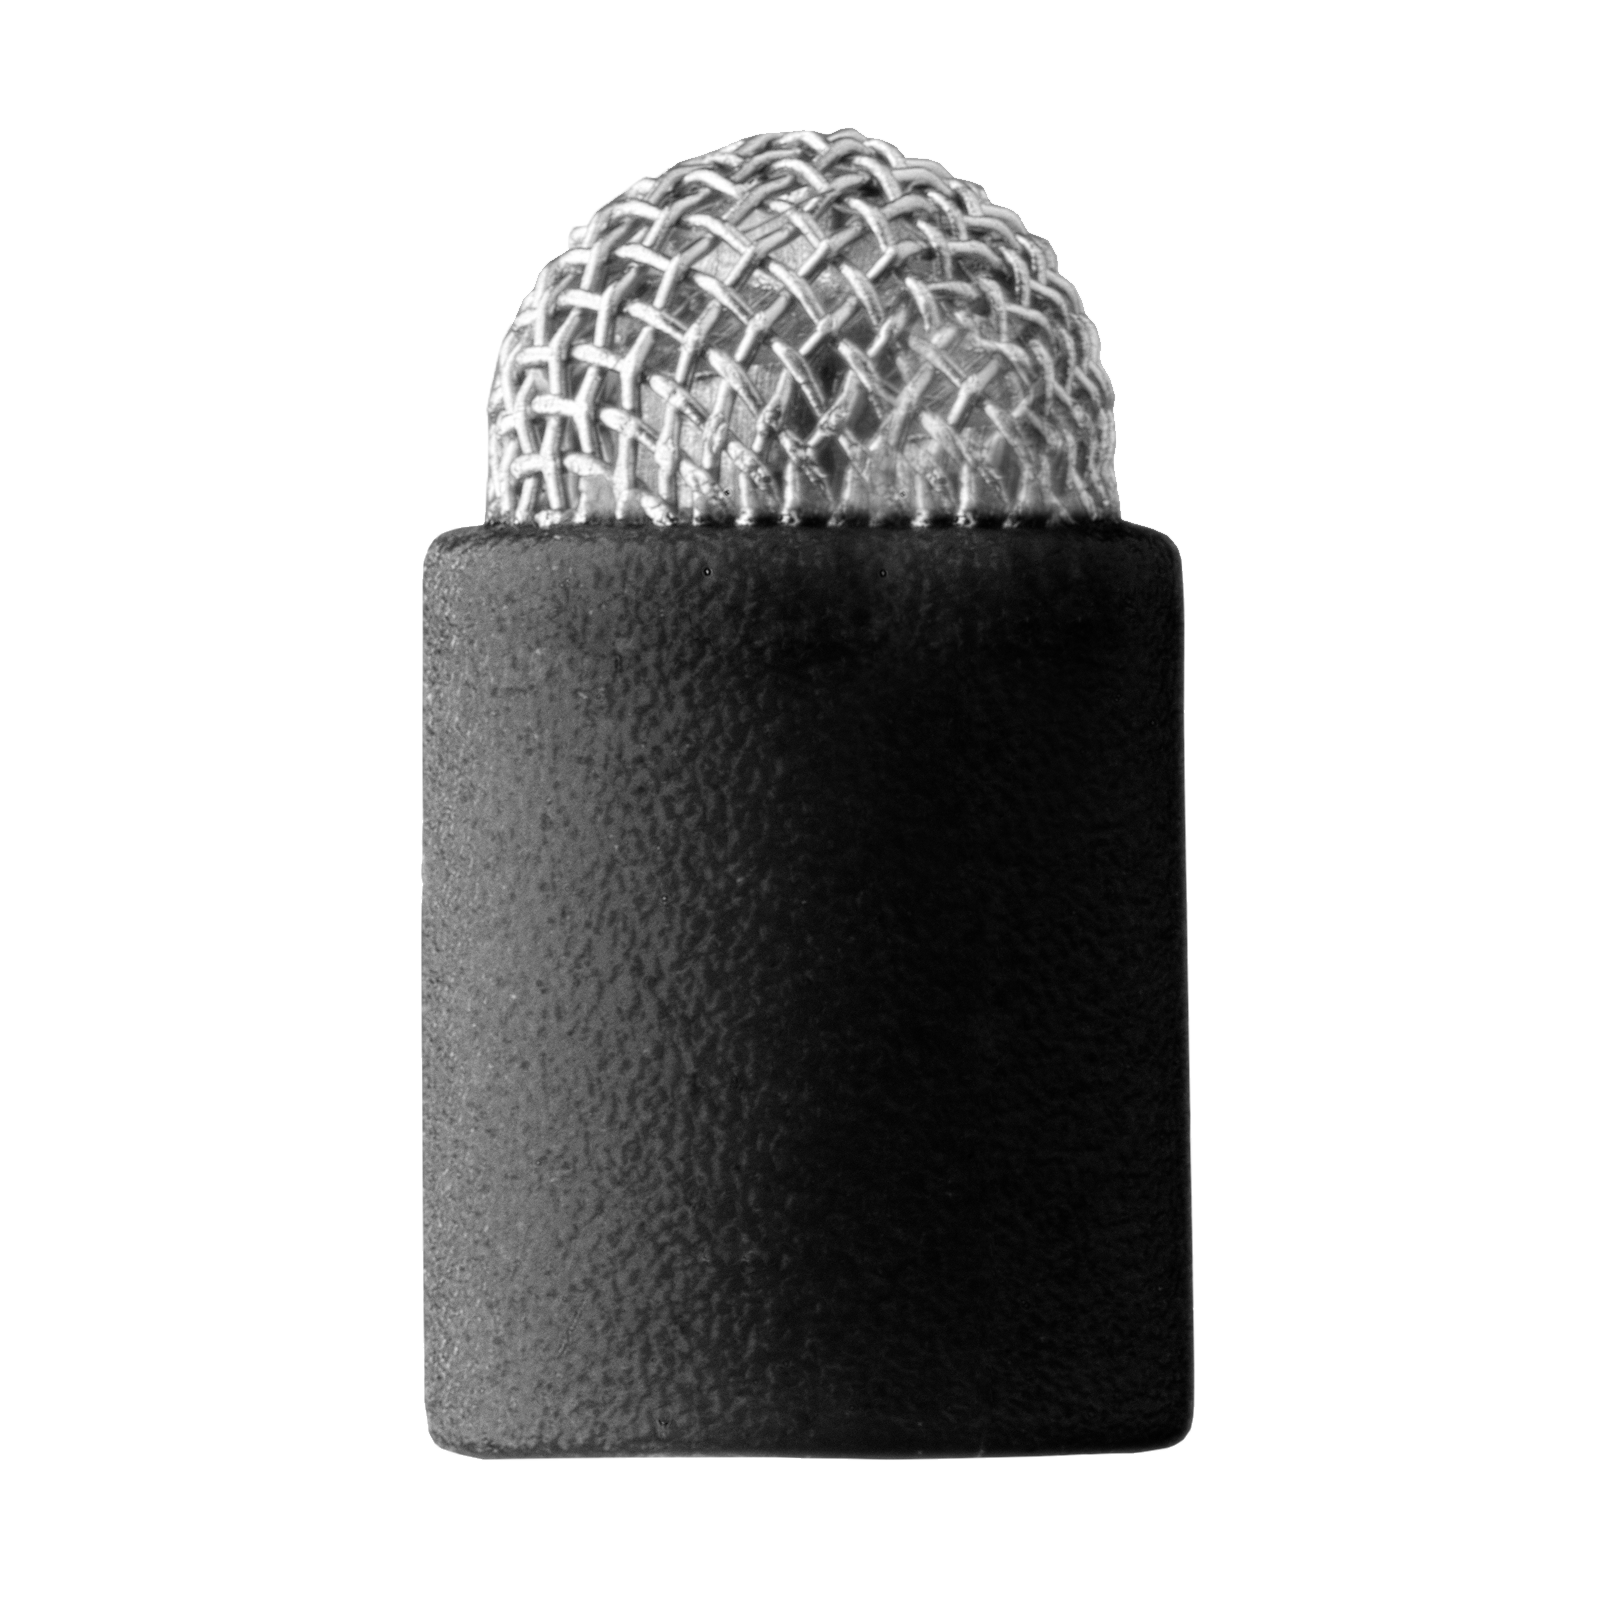 WM82 (5 Pack) - Black - Wiremesh caps for MicroLite microphones - Hero